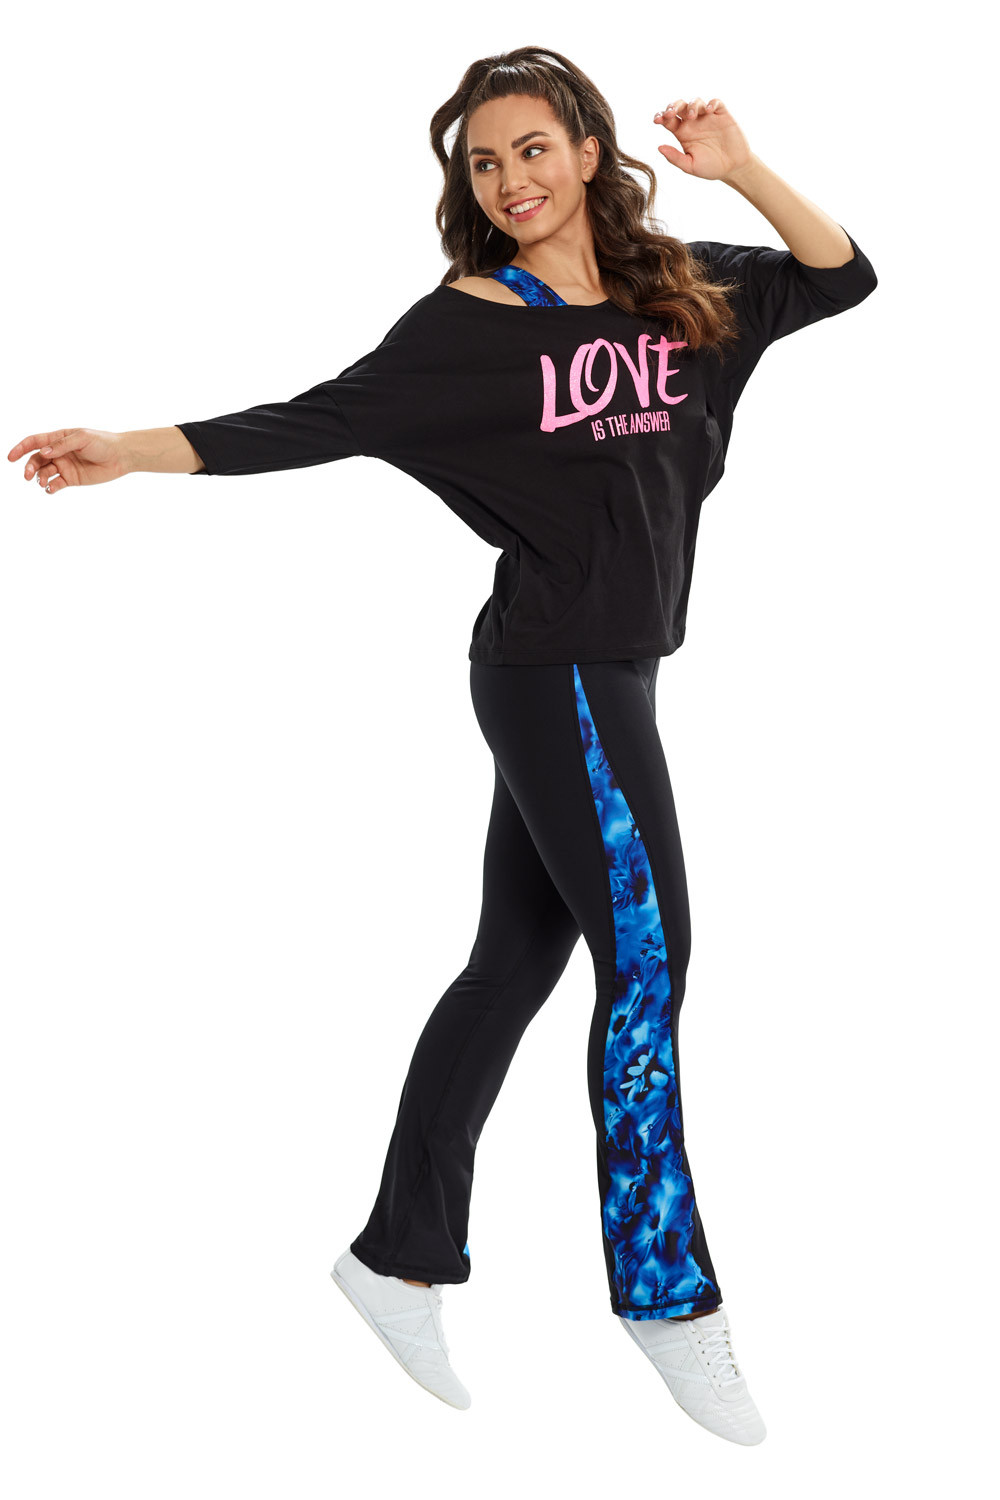 Ultra leichtes Modal-3/4-Arm Shirt MCS001 mit neon pinkem Glitzer-Aufdruck  „Love is the answer”, Winshape Dance Style